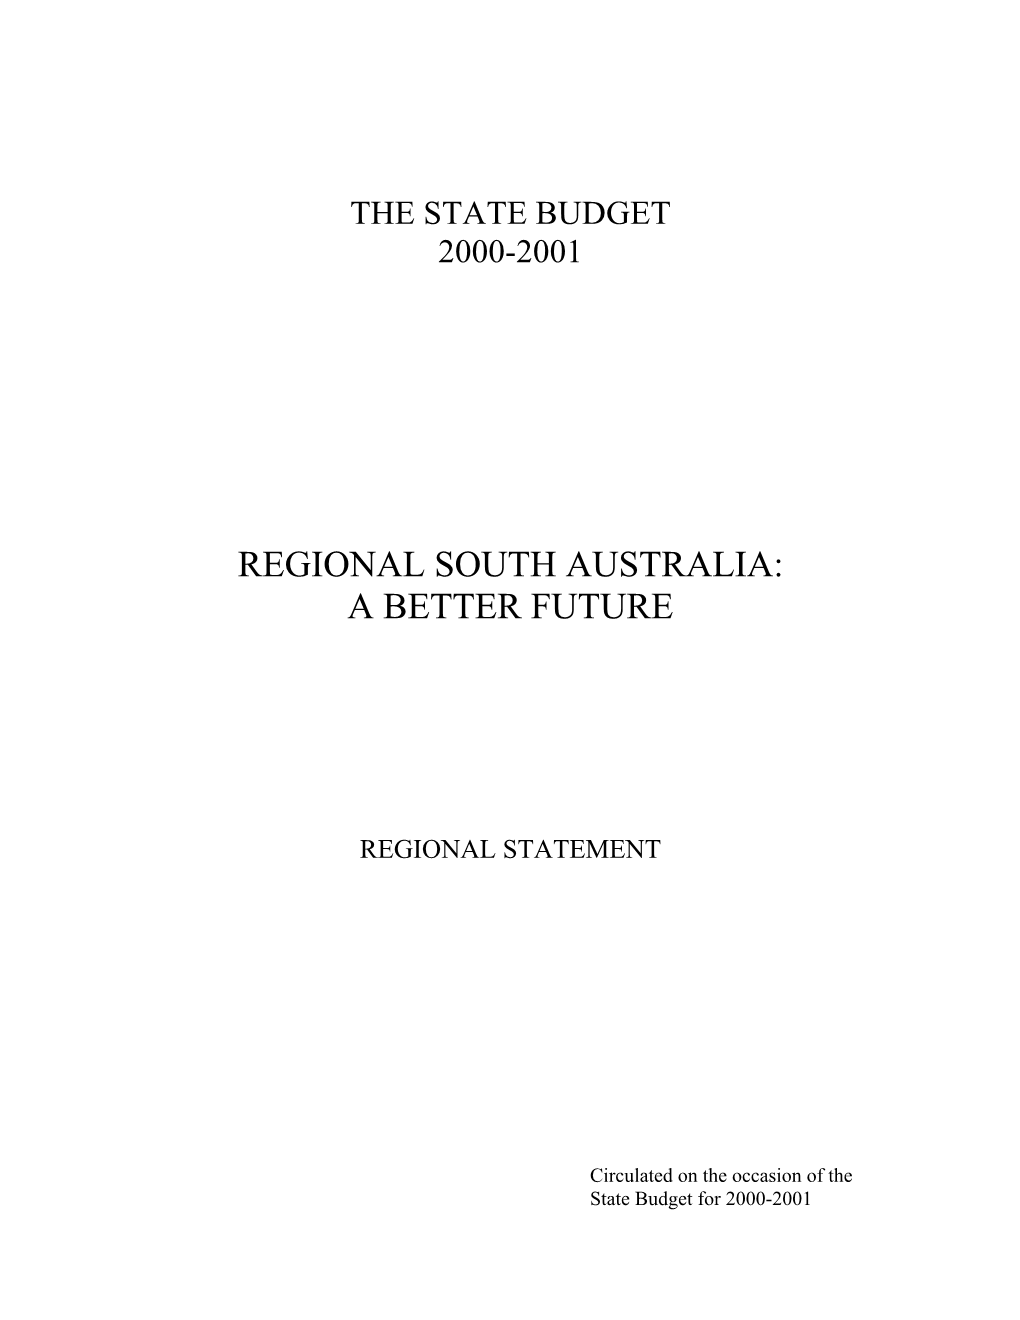 Regional South Australia: a Better Future